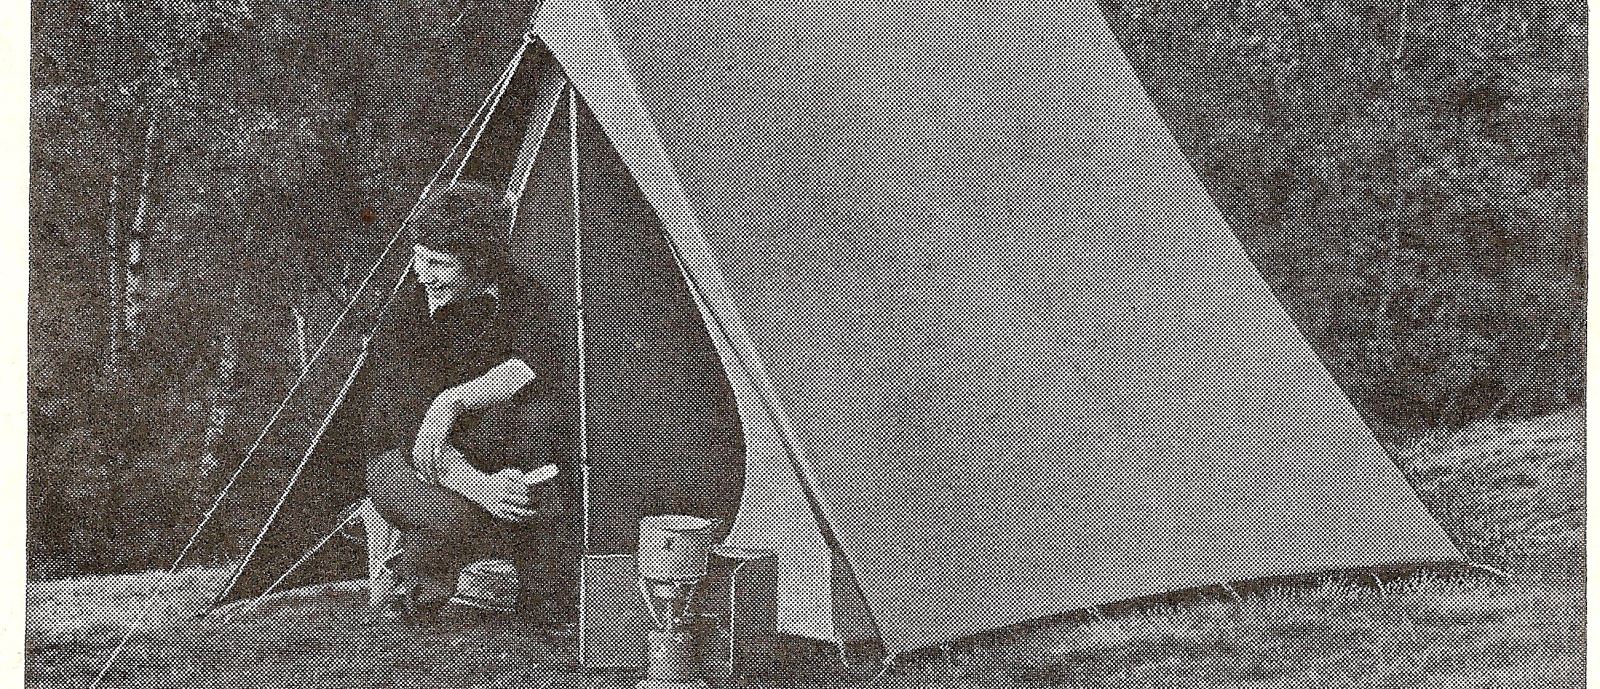 Retro pic of a tent